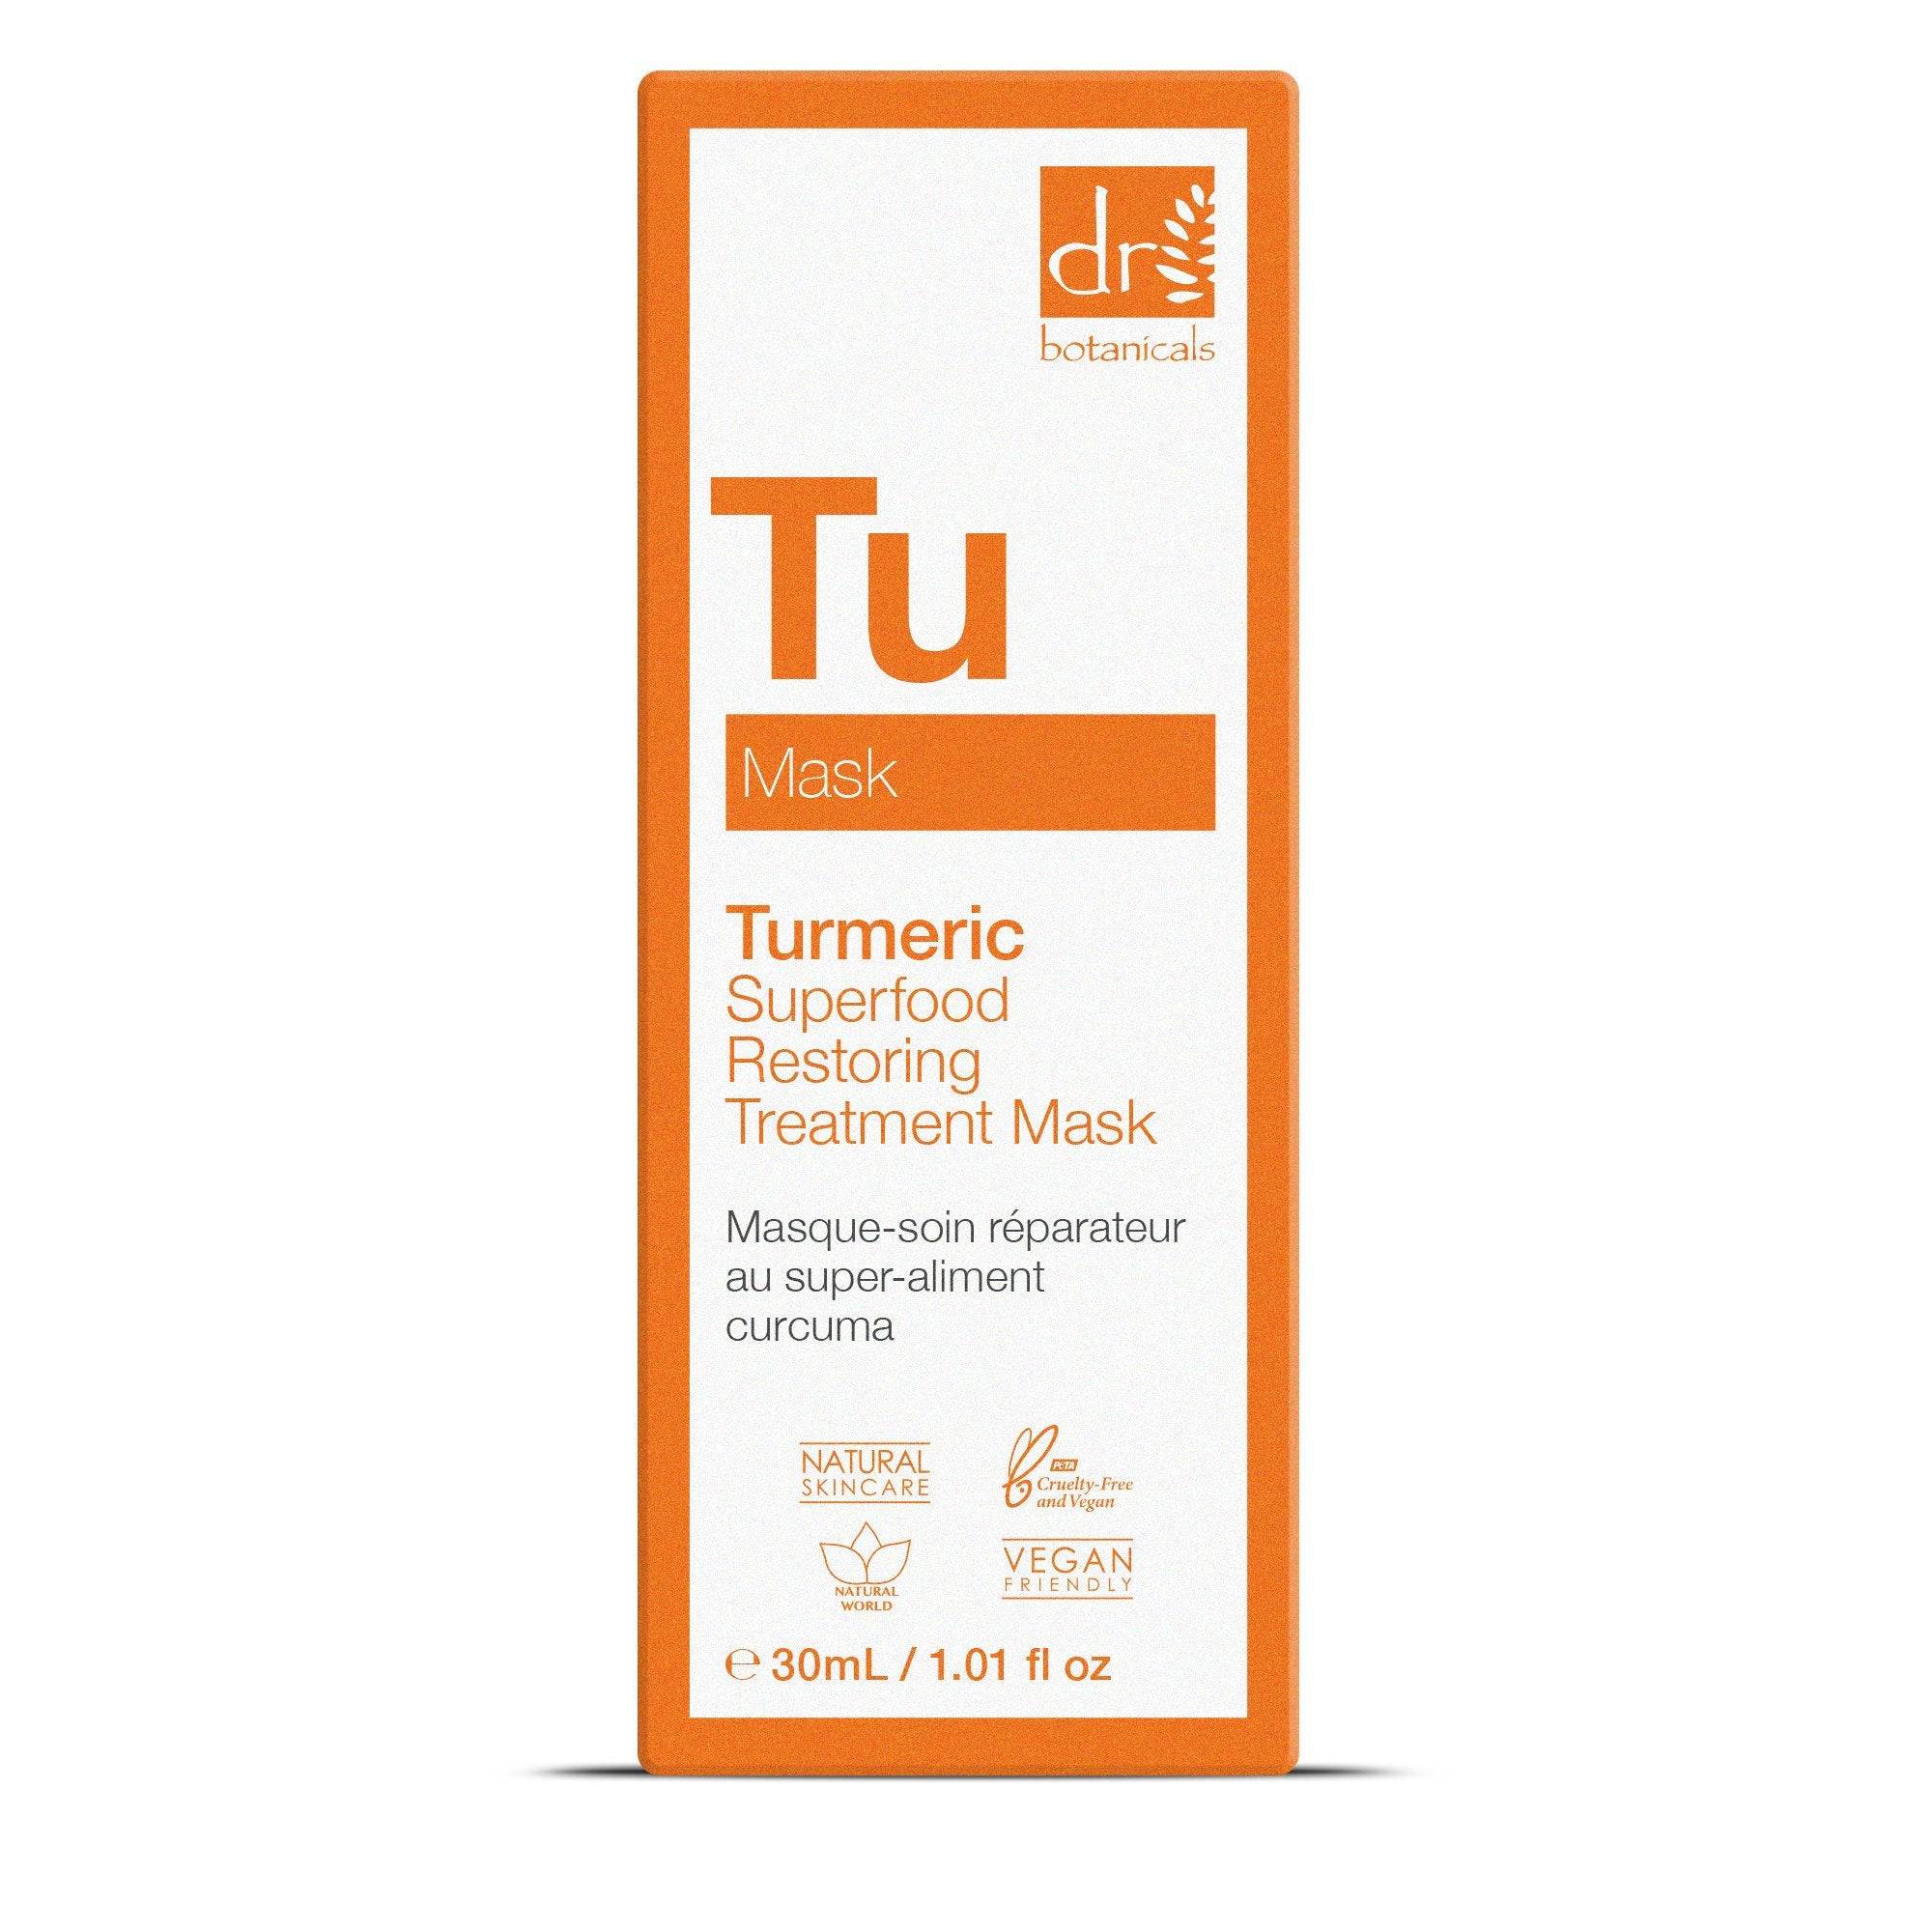 Turmeric Superfood Restoring Treatment Mask 30ml